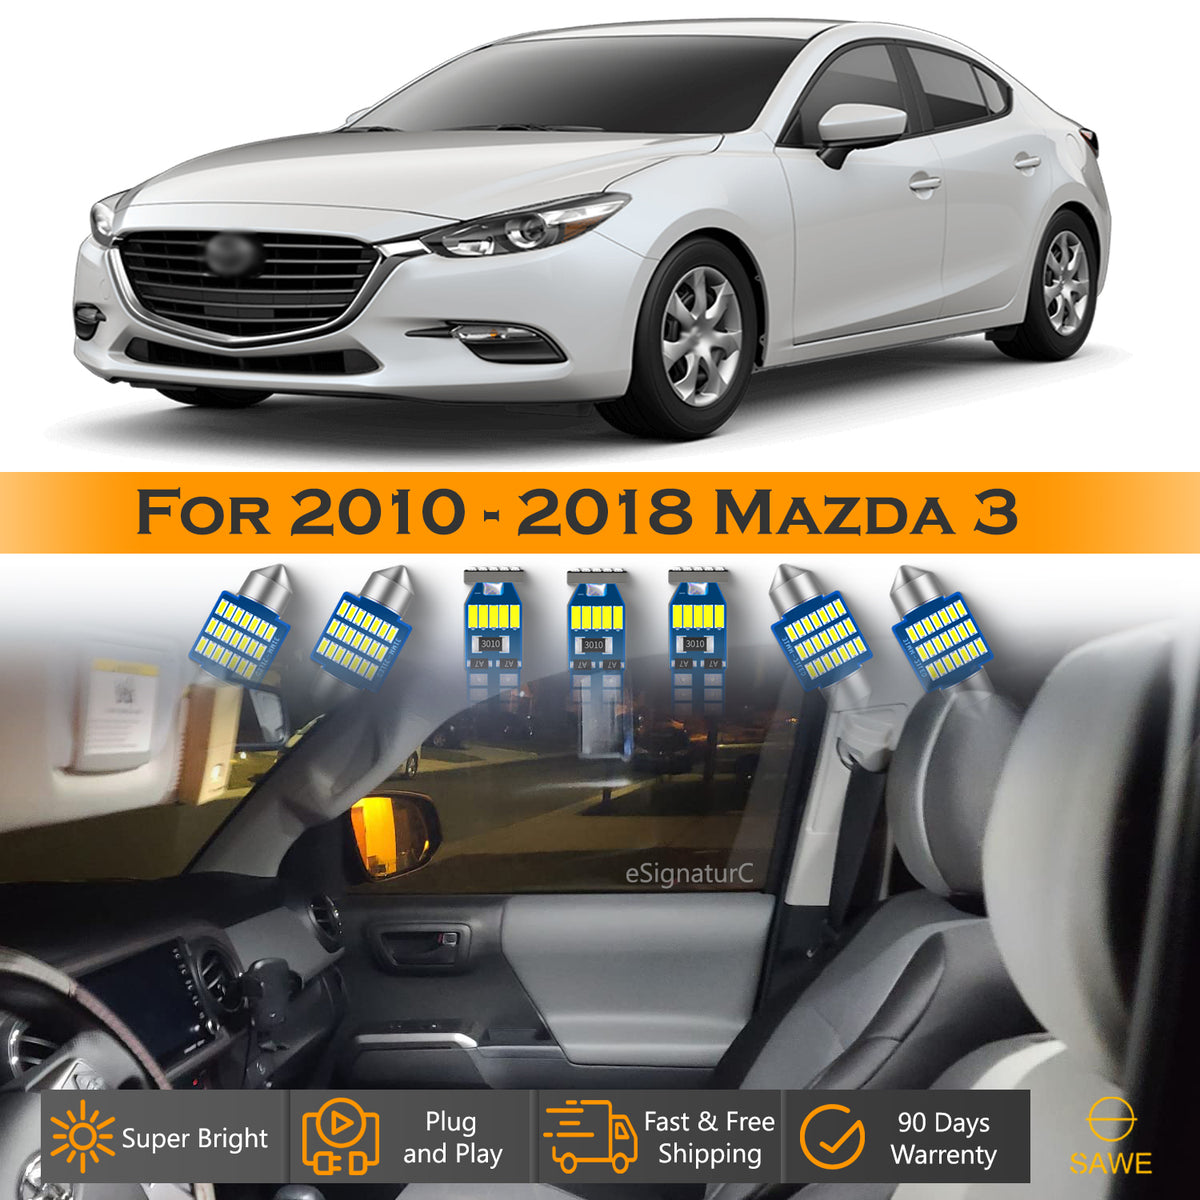 For Mazda 3 Interior LED Lights - Dome & Map Light Bulbs Package Kit for 2010 - 2018 - White